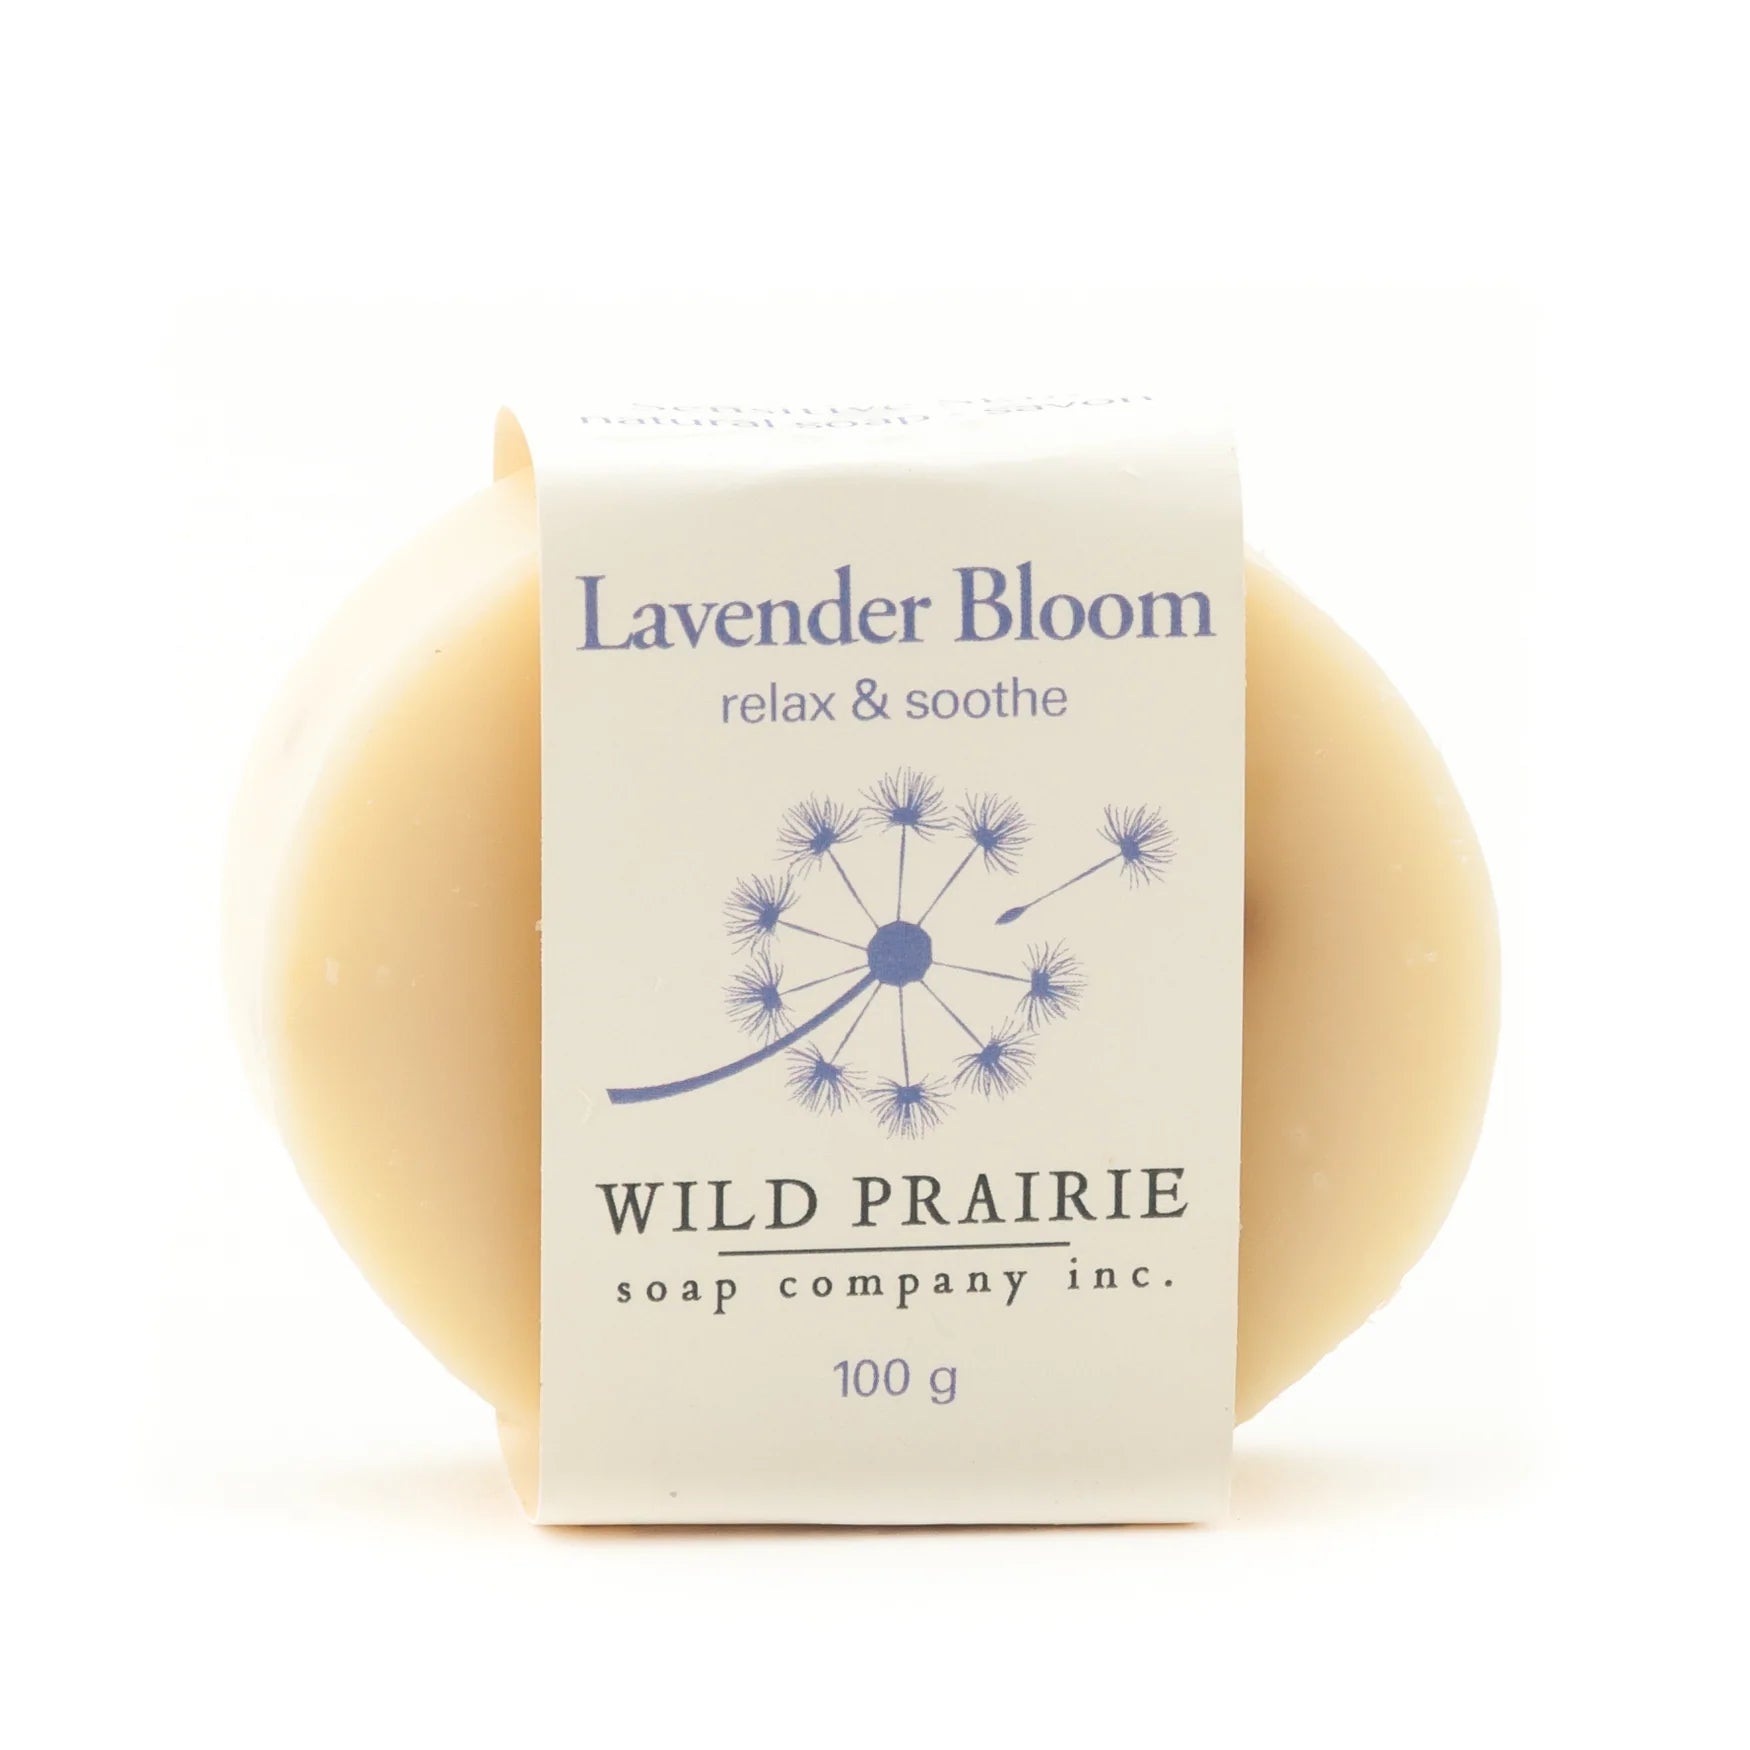 Wild Prairie Soap Lavender Bloom Soap